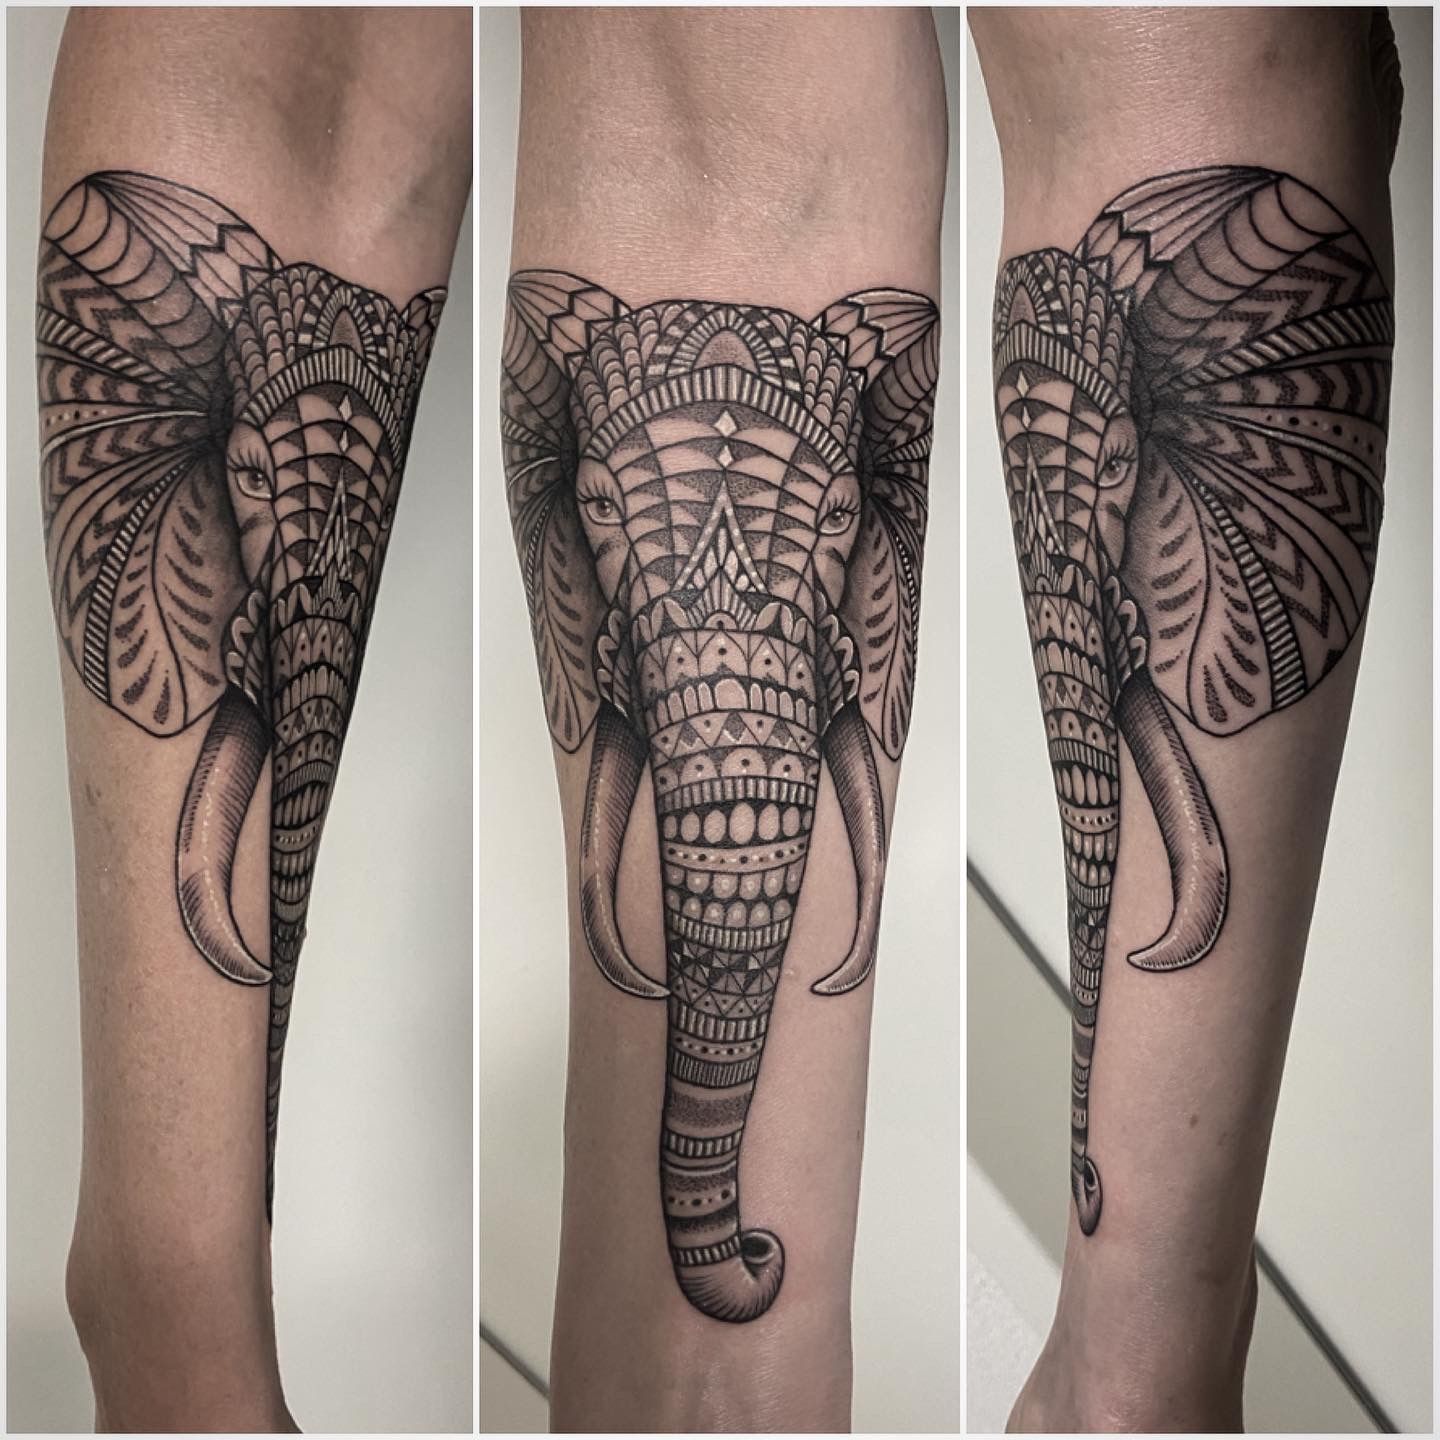 Twisted Tattoo  Small elephant wrist tattoo  Facebook